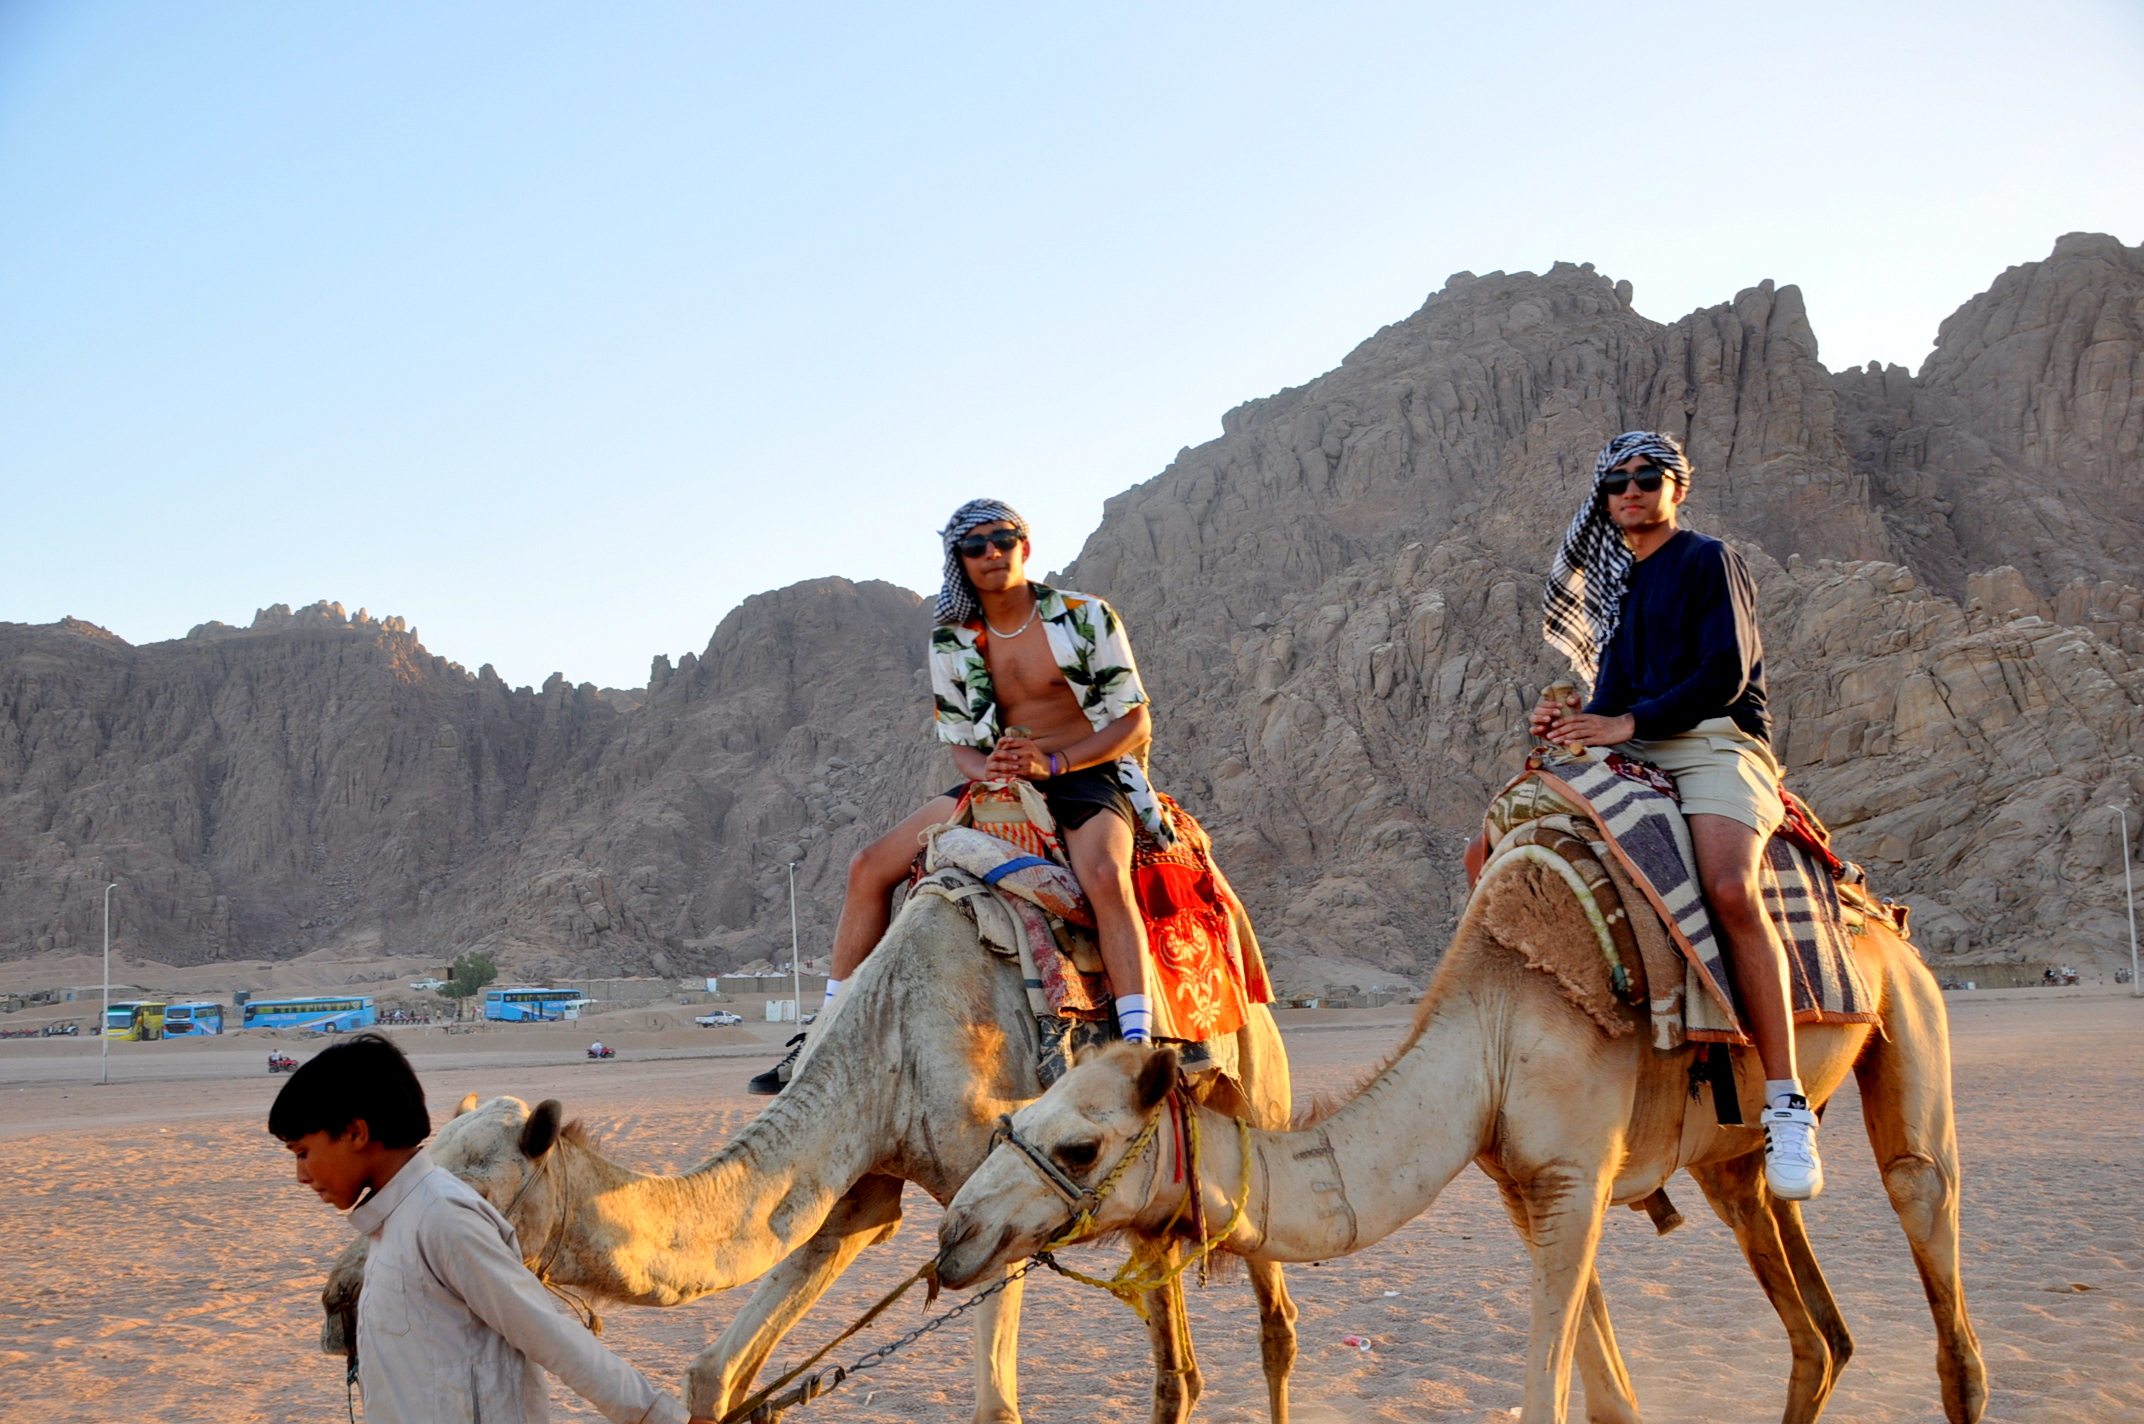 Safari 5 in 1 Desert excursion - Quad, Camel, Dinner, Show & Star Gazing